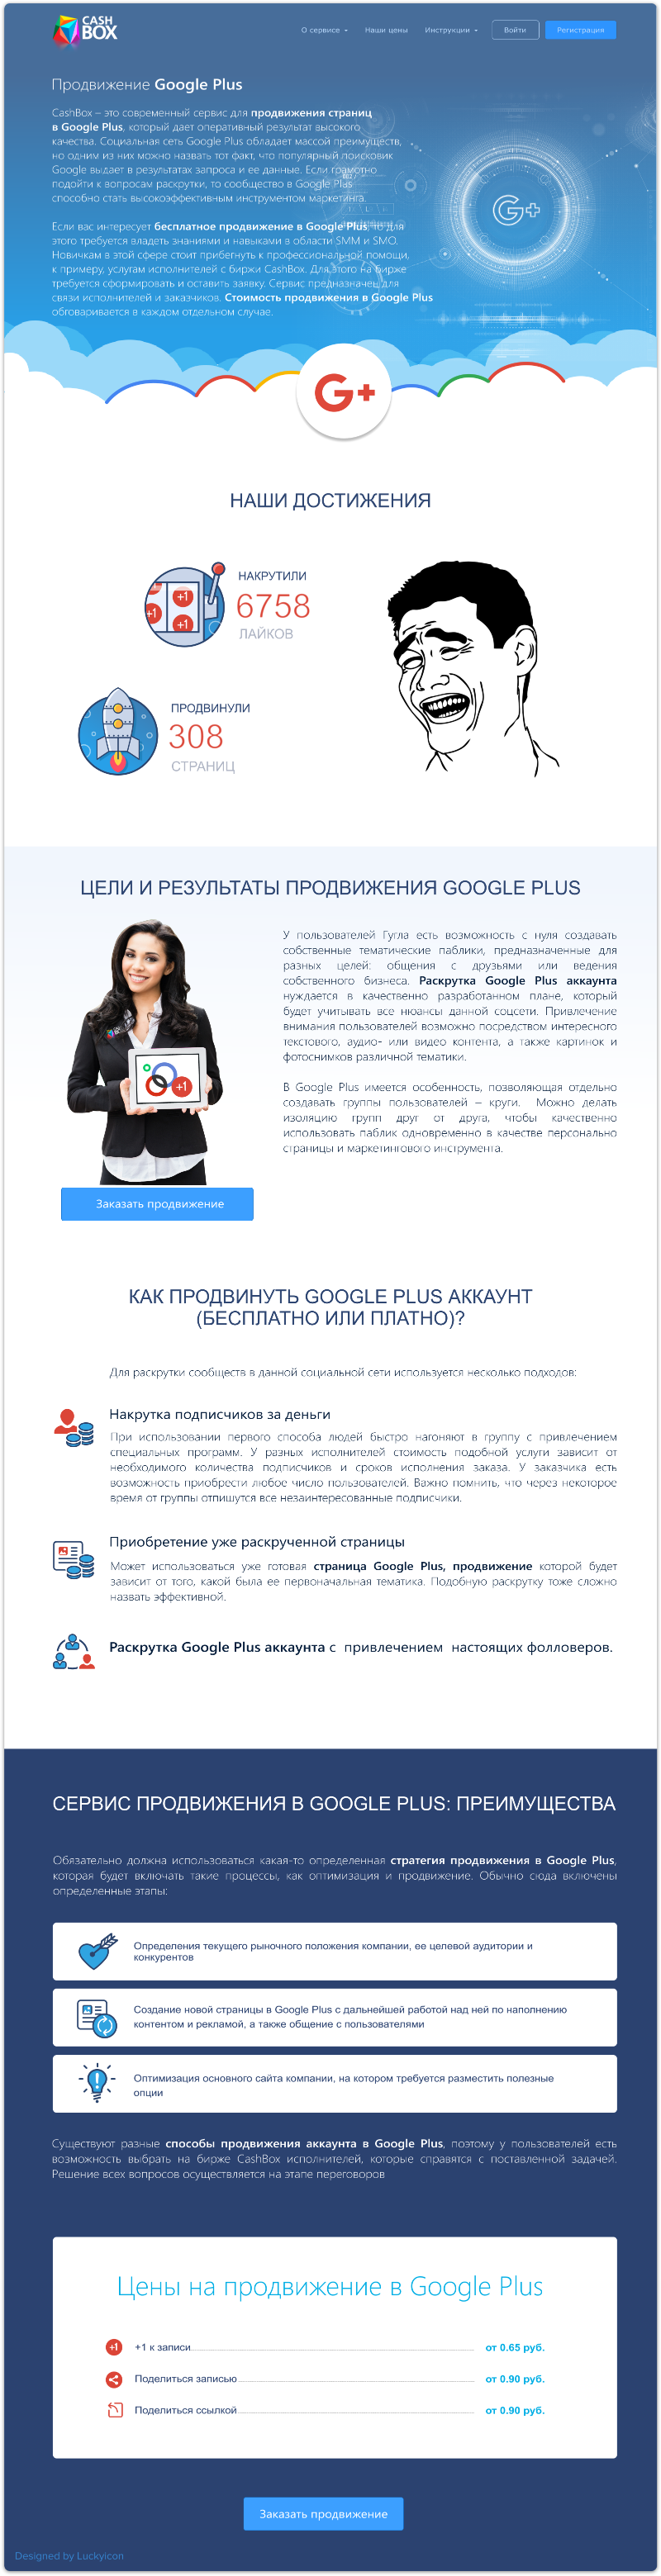 Promotion of Google Plus